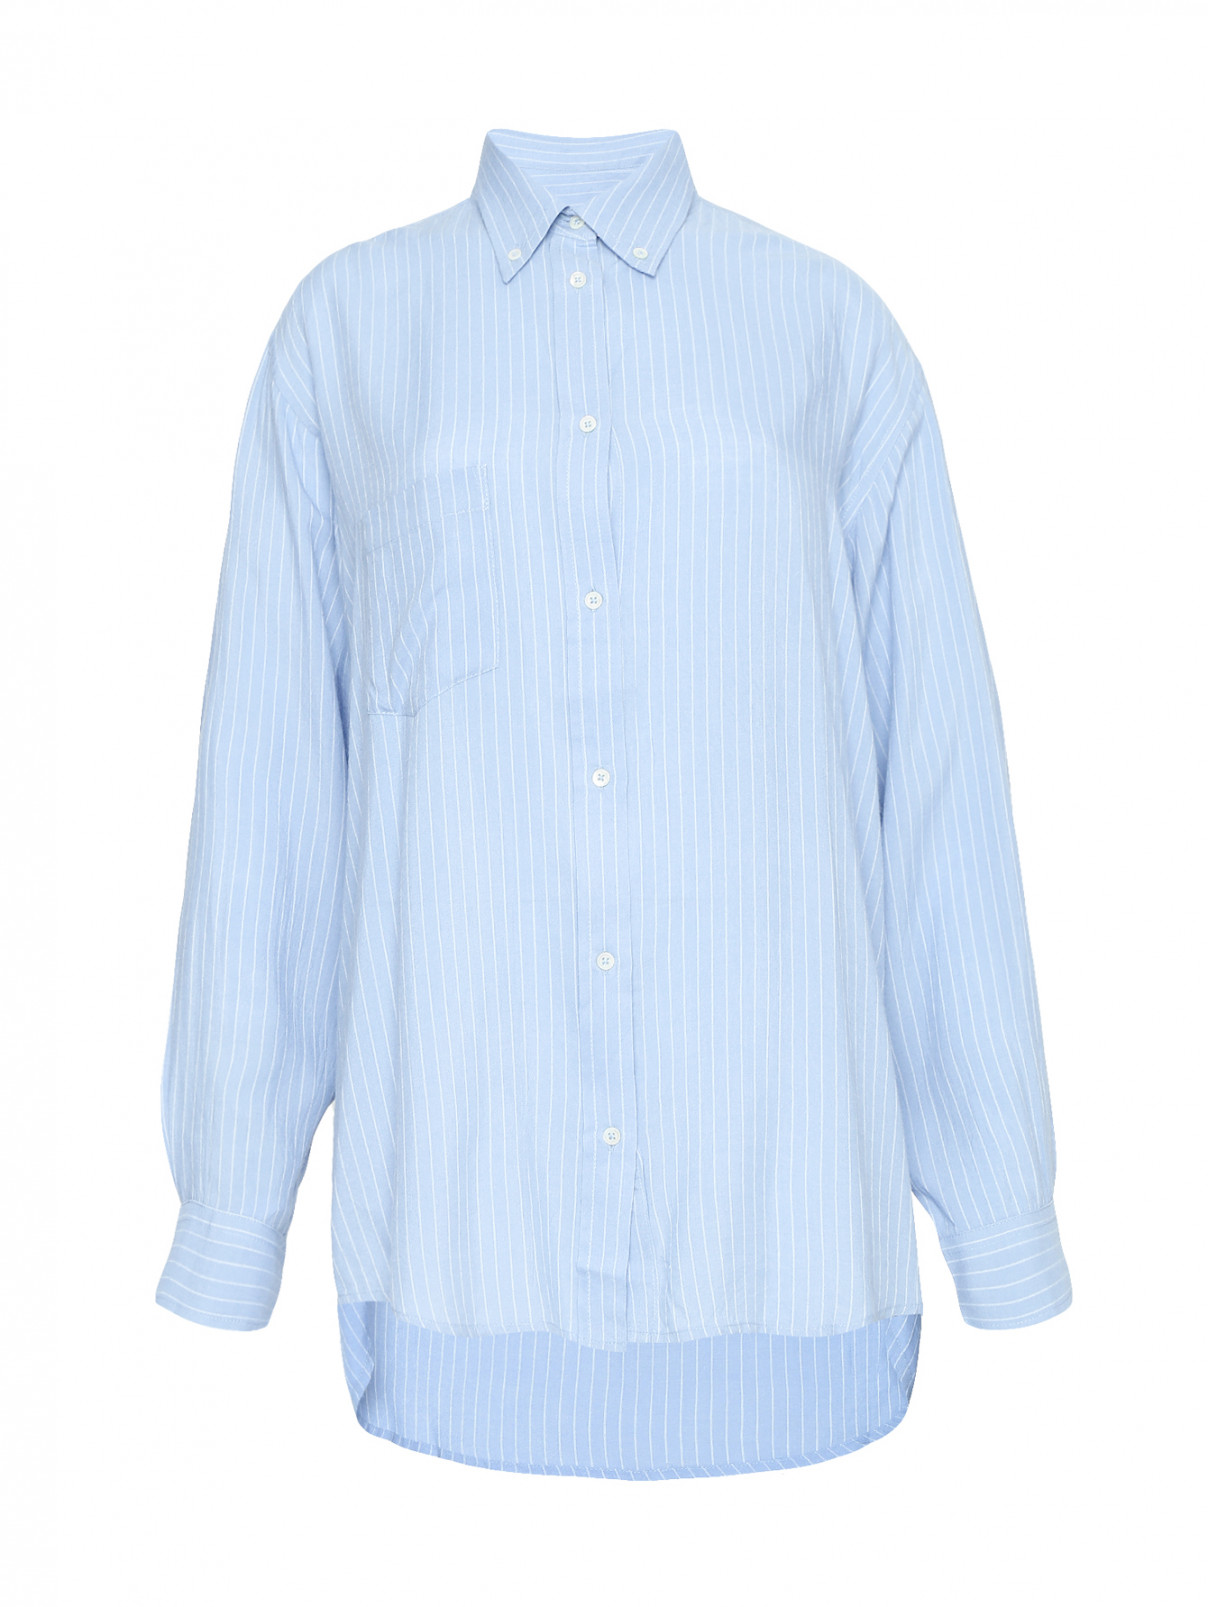 Рубашка свободного кроя с узором "полоска" Iro  –  Общий вид  – Цвет:  Синий